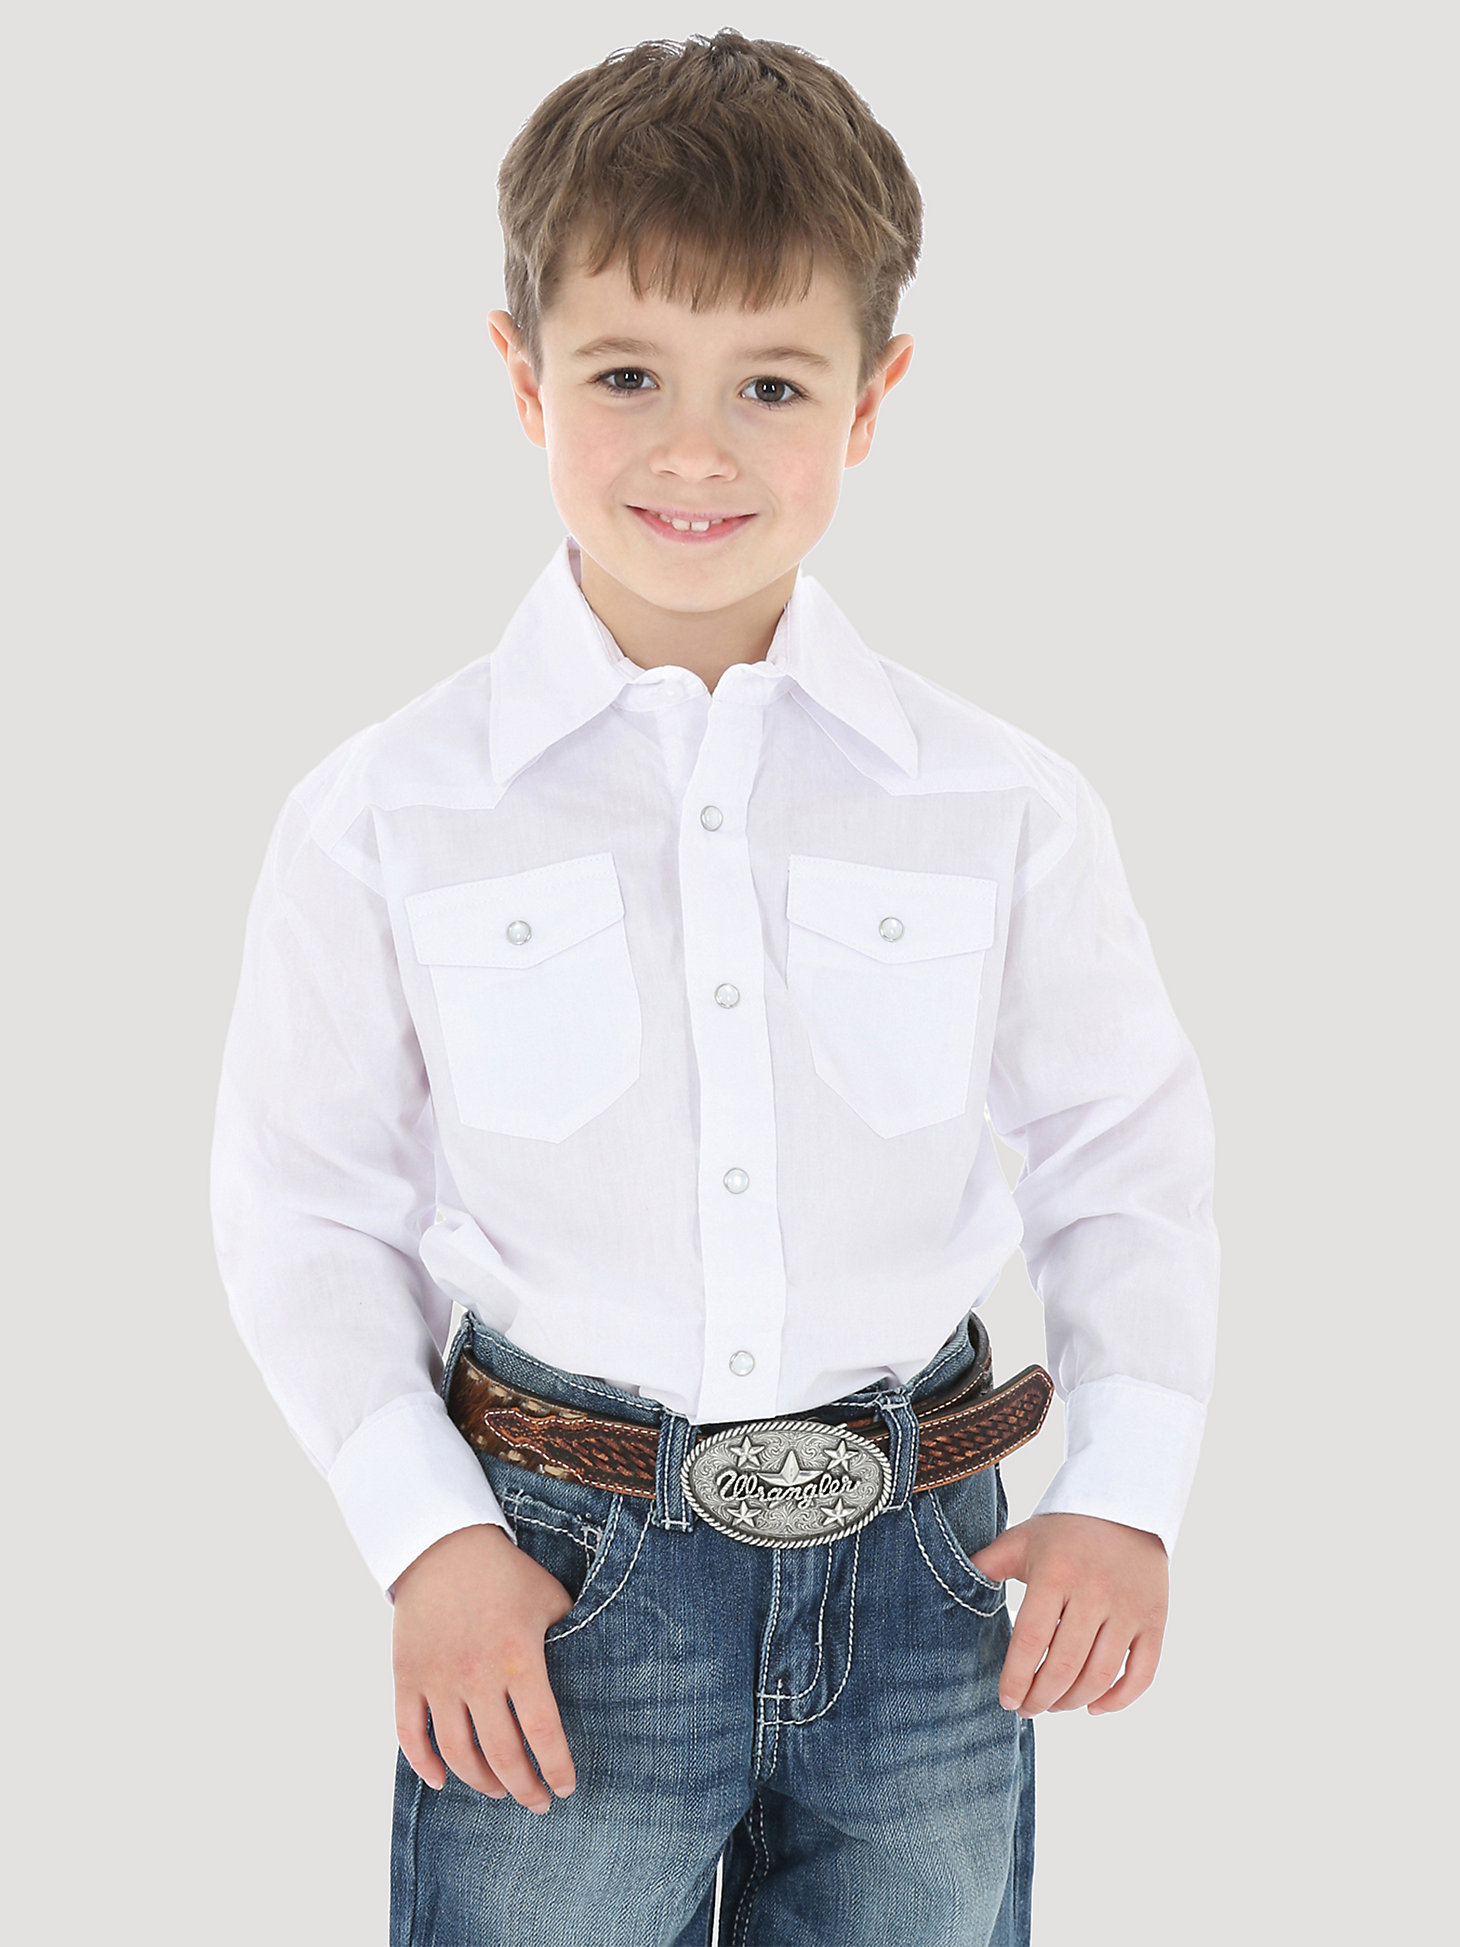 WRANGLER Boy's White Plaid Long Sleeve Pearl Snap Western Shirt BWR034A NWT 